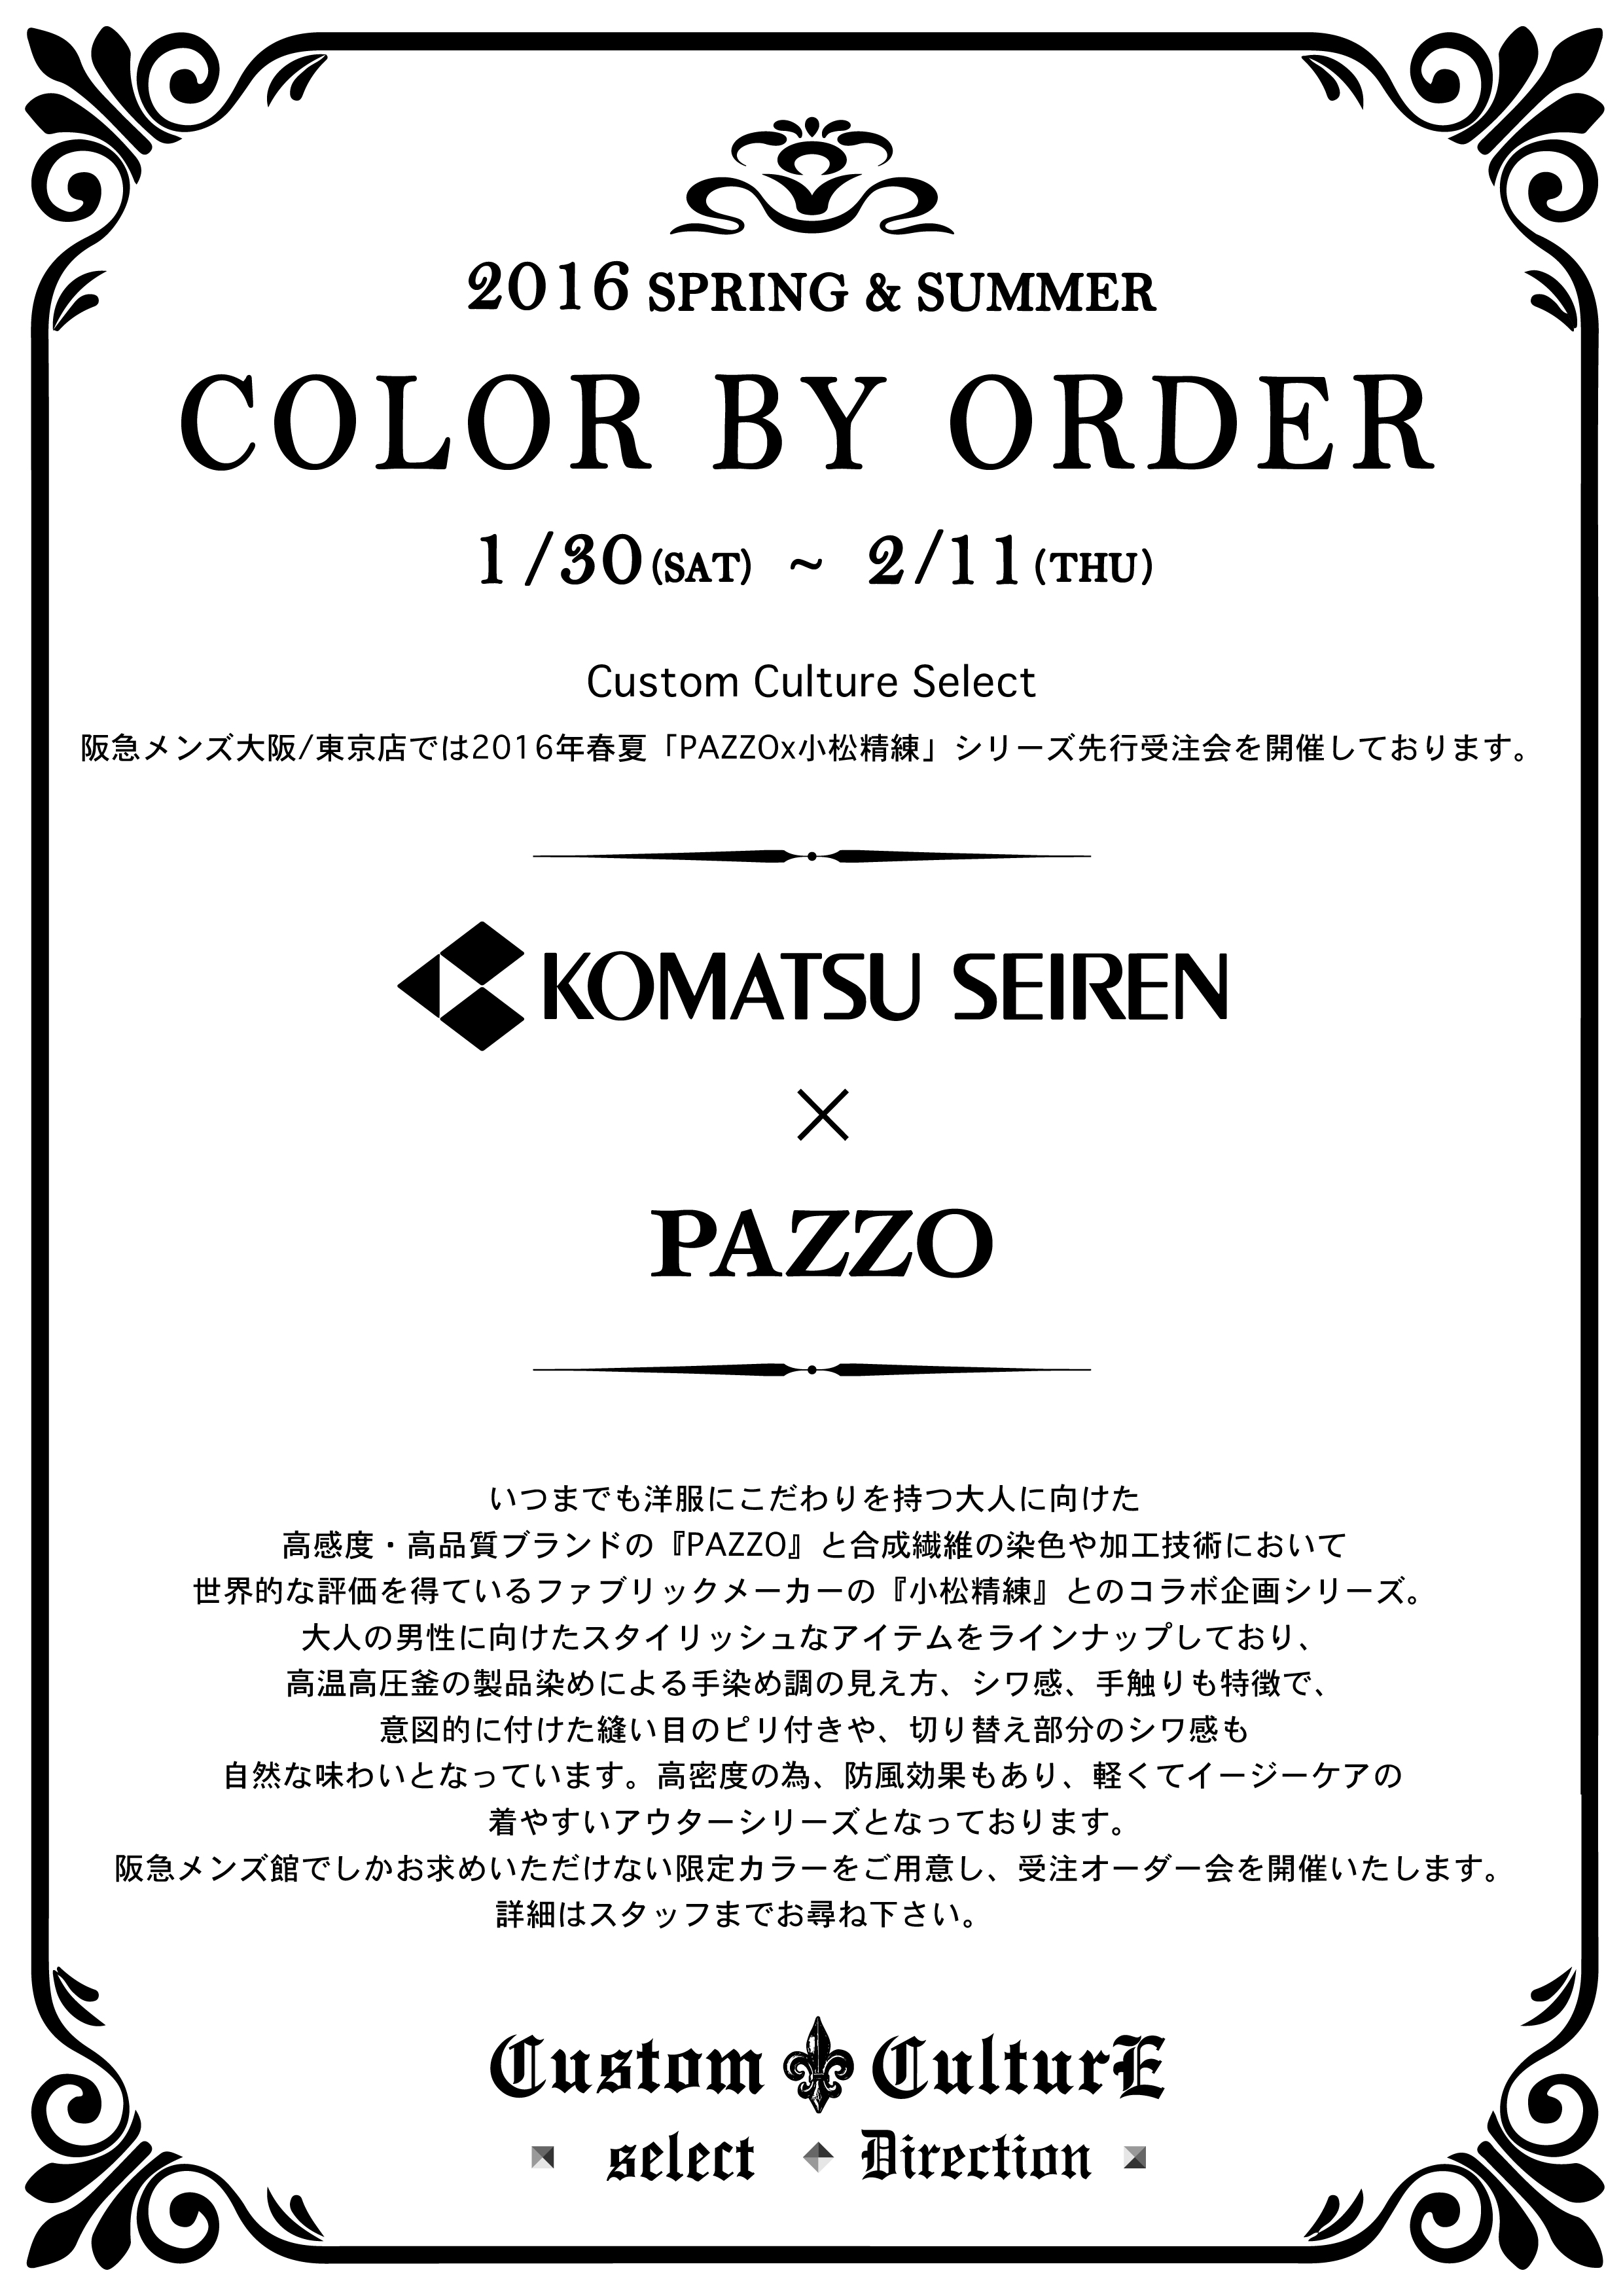 PAZZO×小松精練カラーバイオーダーフェア